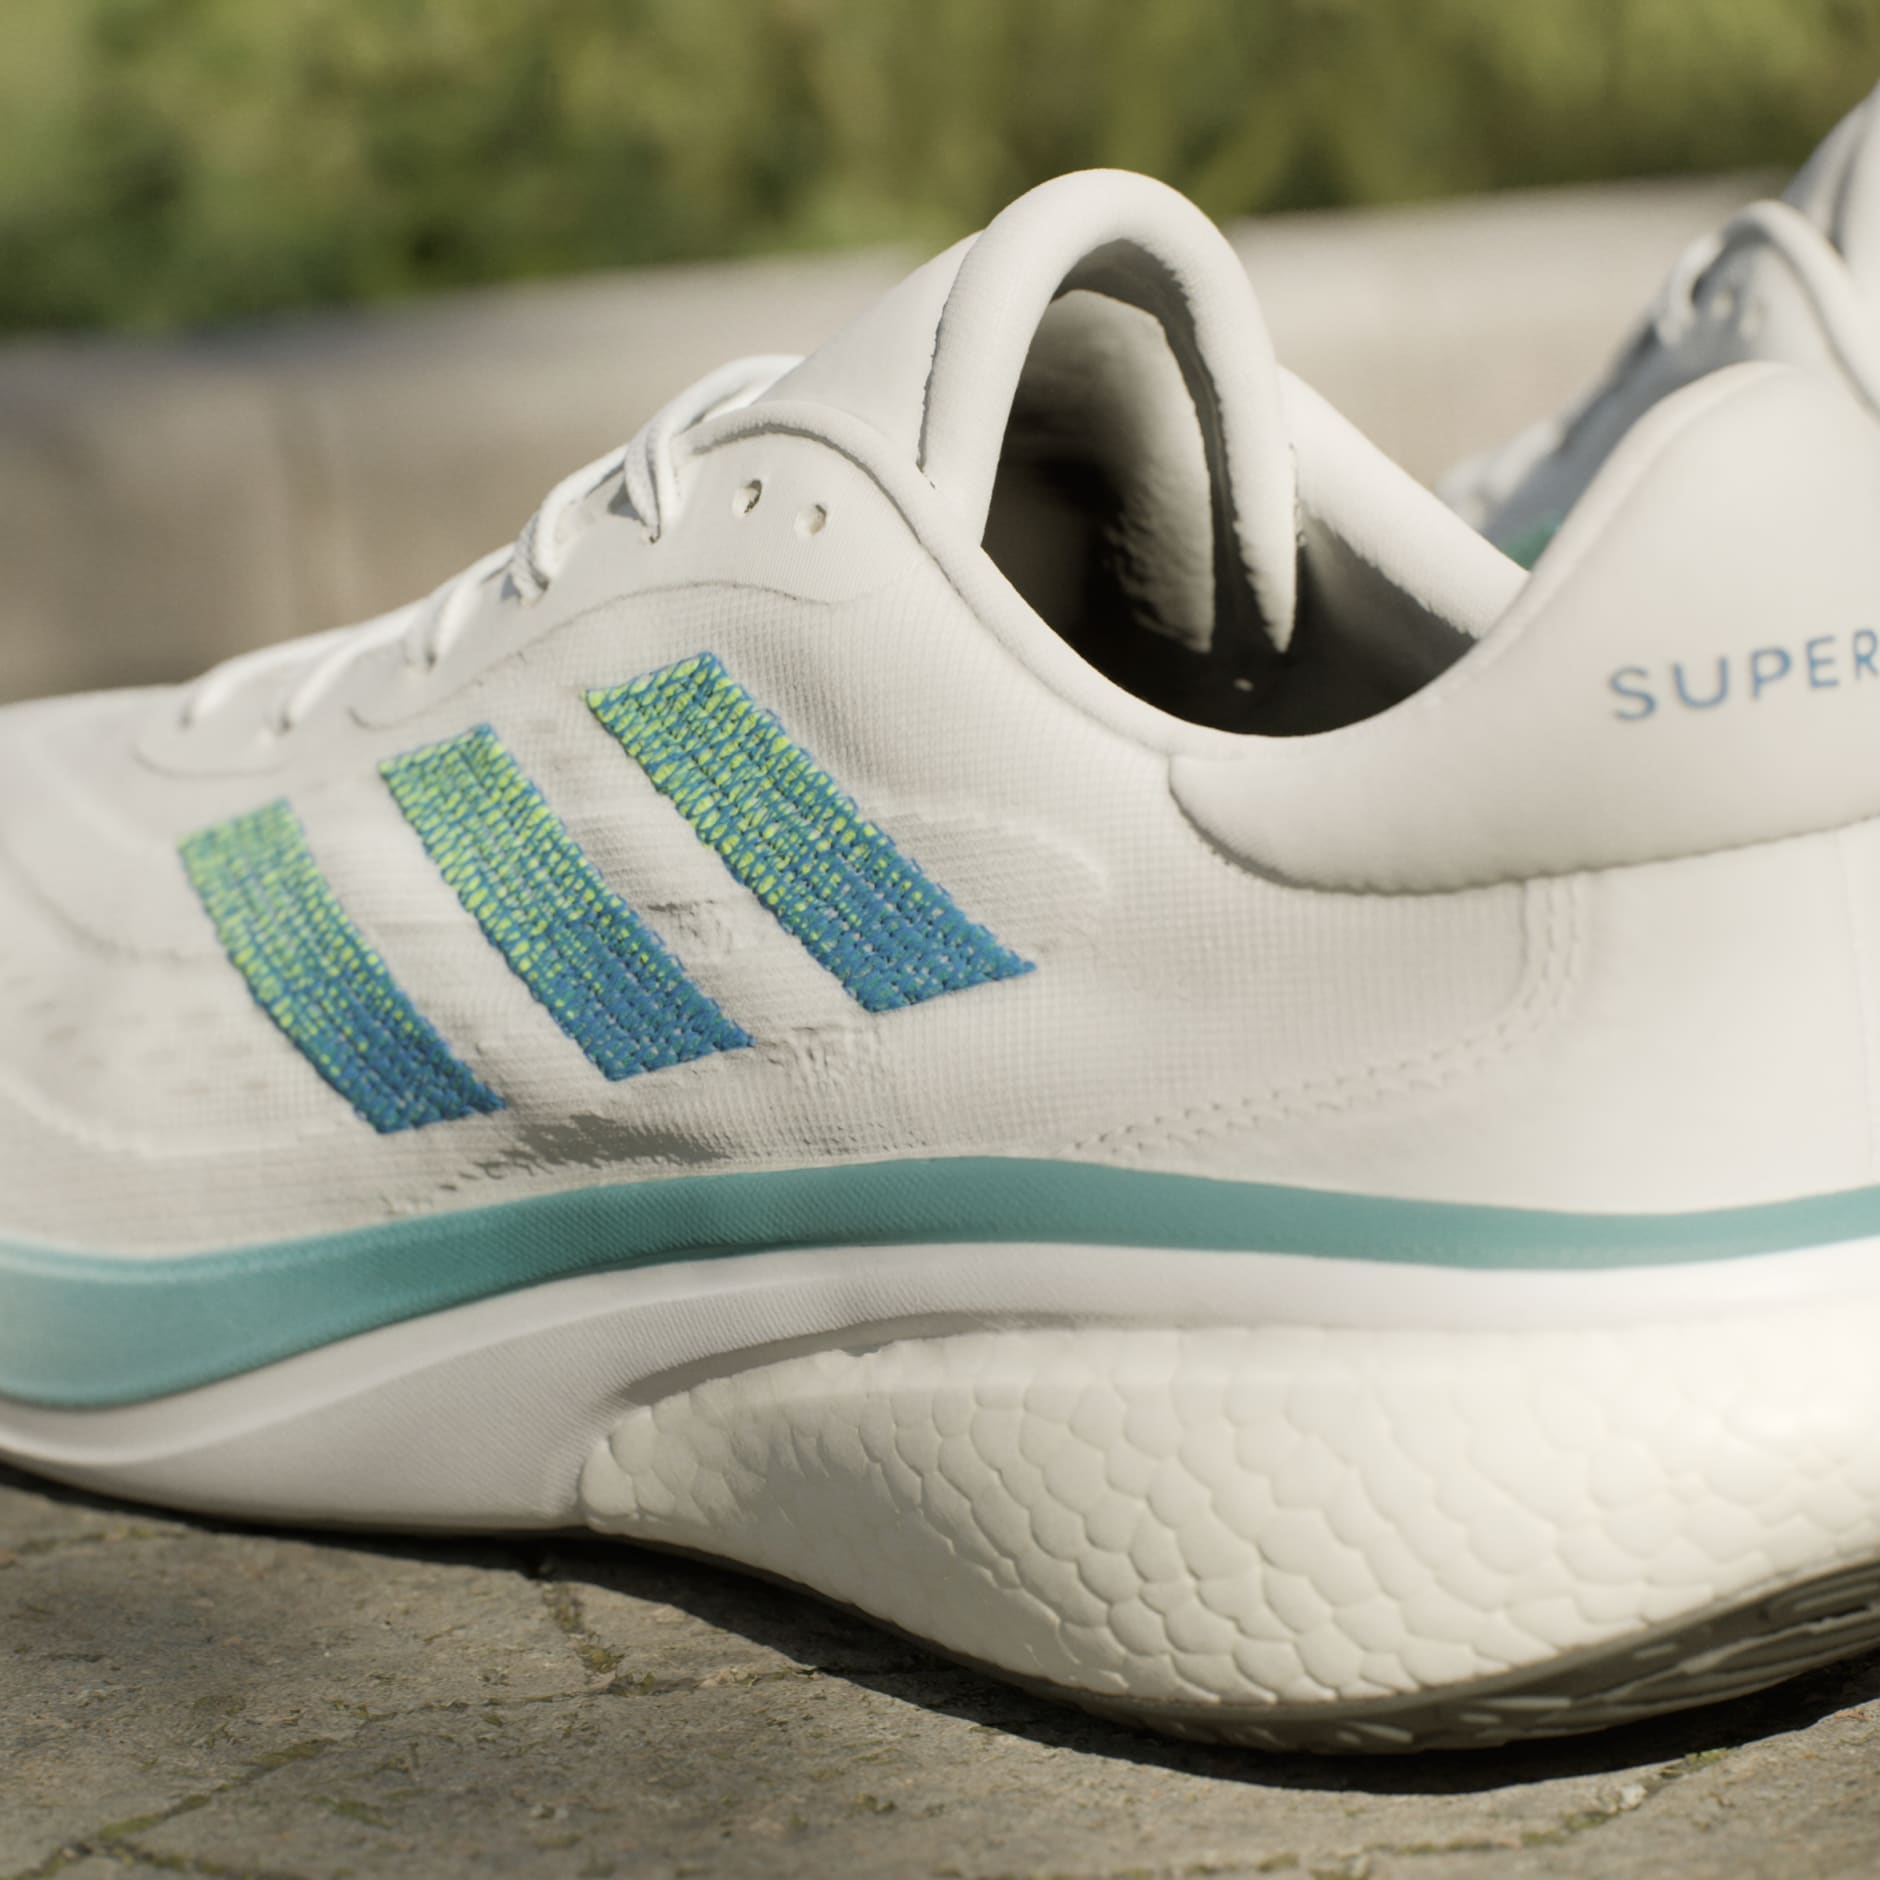 Men's Shoes - Supernova 3 Running Shoes - White | adidas Oman